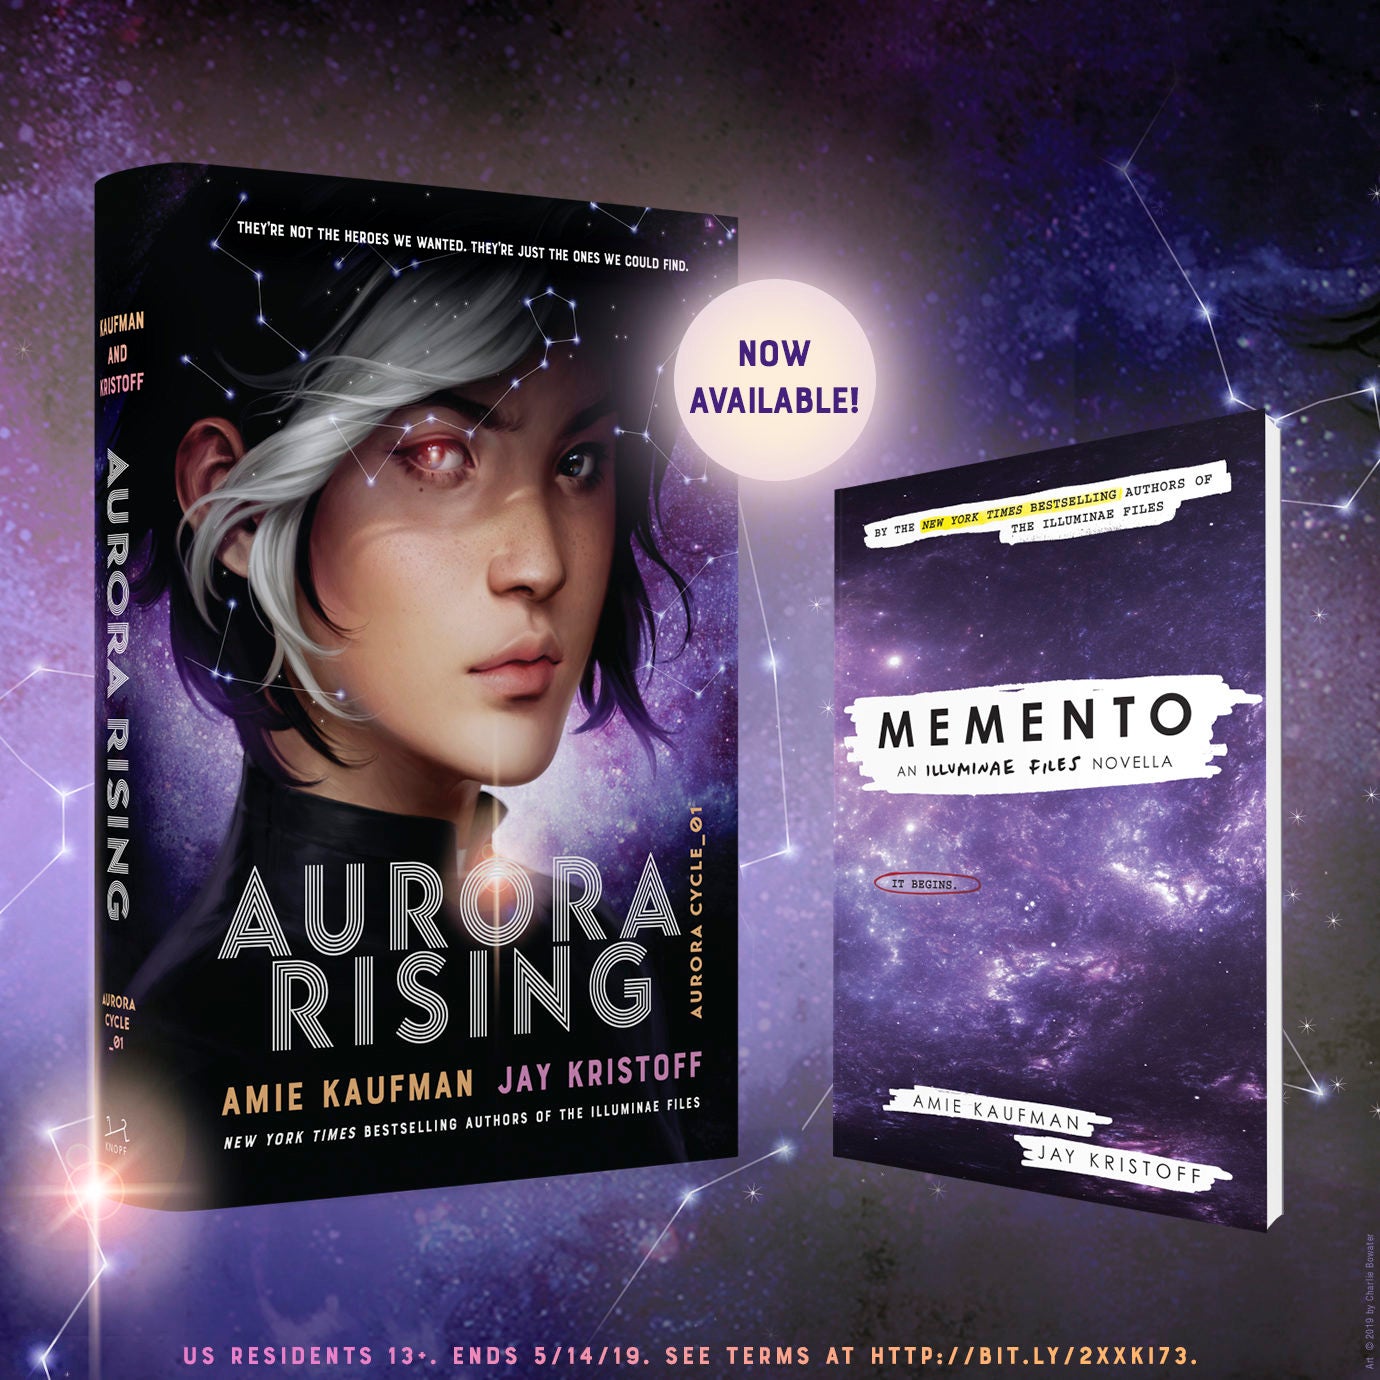 Aurora Rising by Jay Kristoff and Amie Kaufman